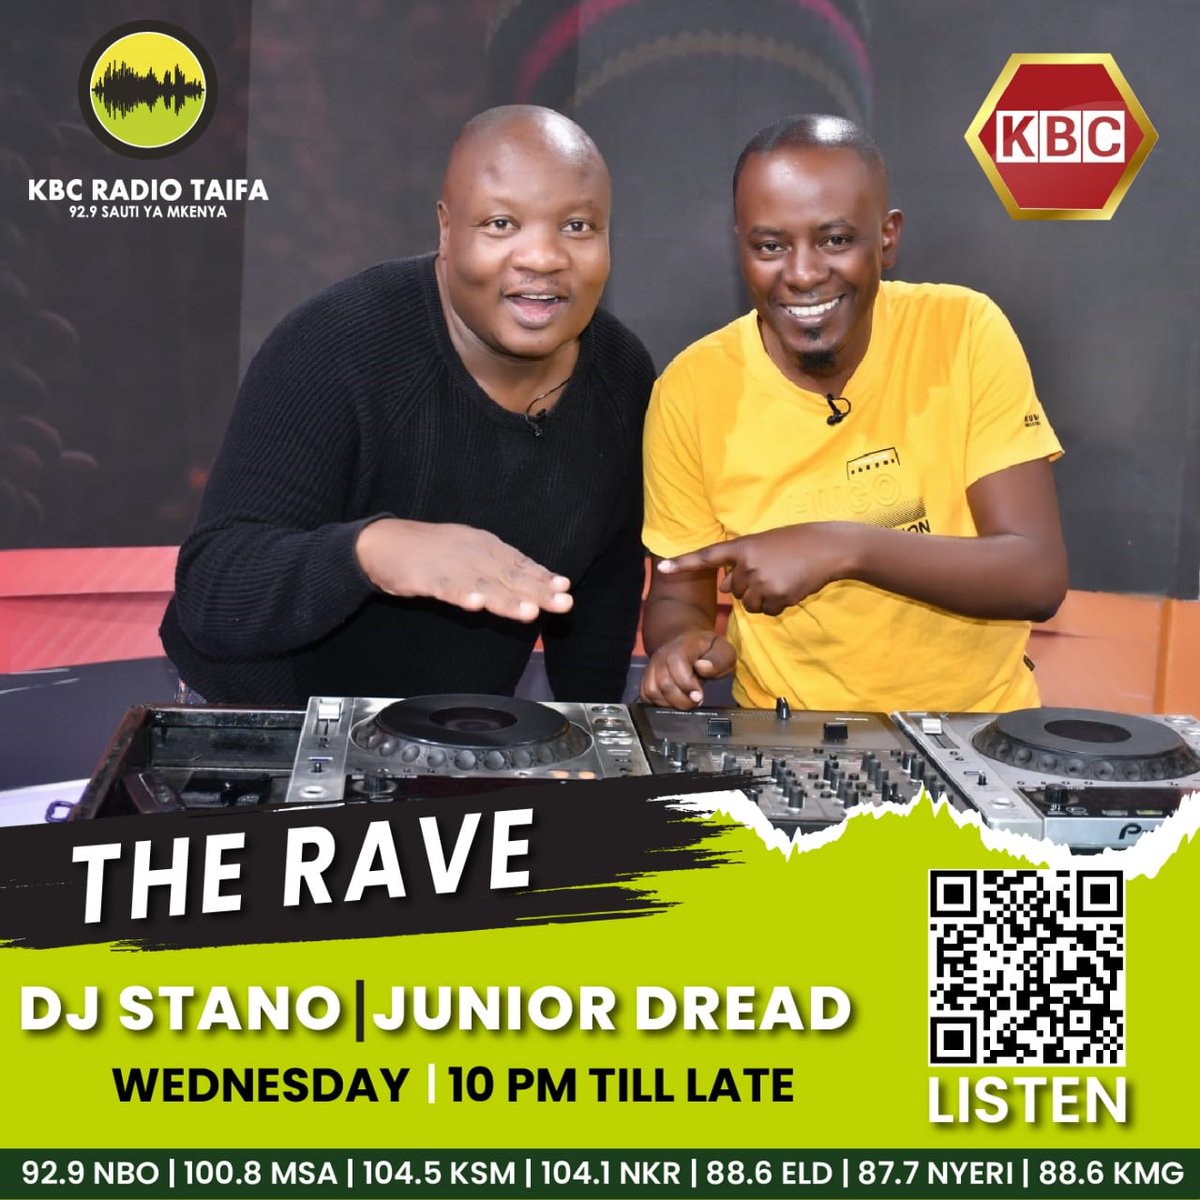 For your weekly Reggae dose where Radio meets Tv, we link up on #TheRaveKbc . @juniordreadd & @StanoDj pon control. 10pm kwenye Radio & 10:30pm Tv joins in. 
#ReggaeMusicSoNice